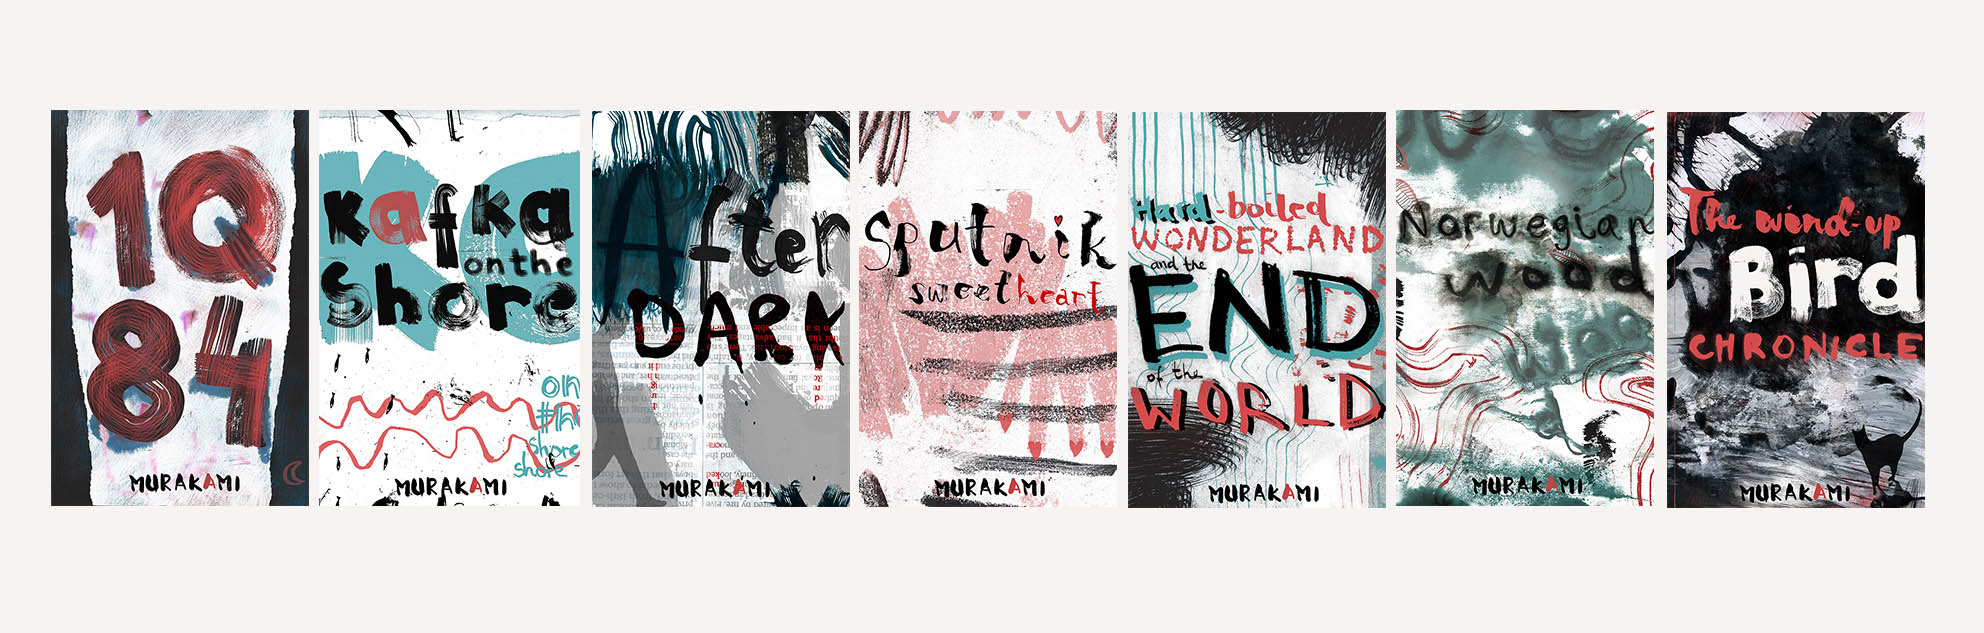 A series of book cover designs for Haruki Murakami